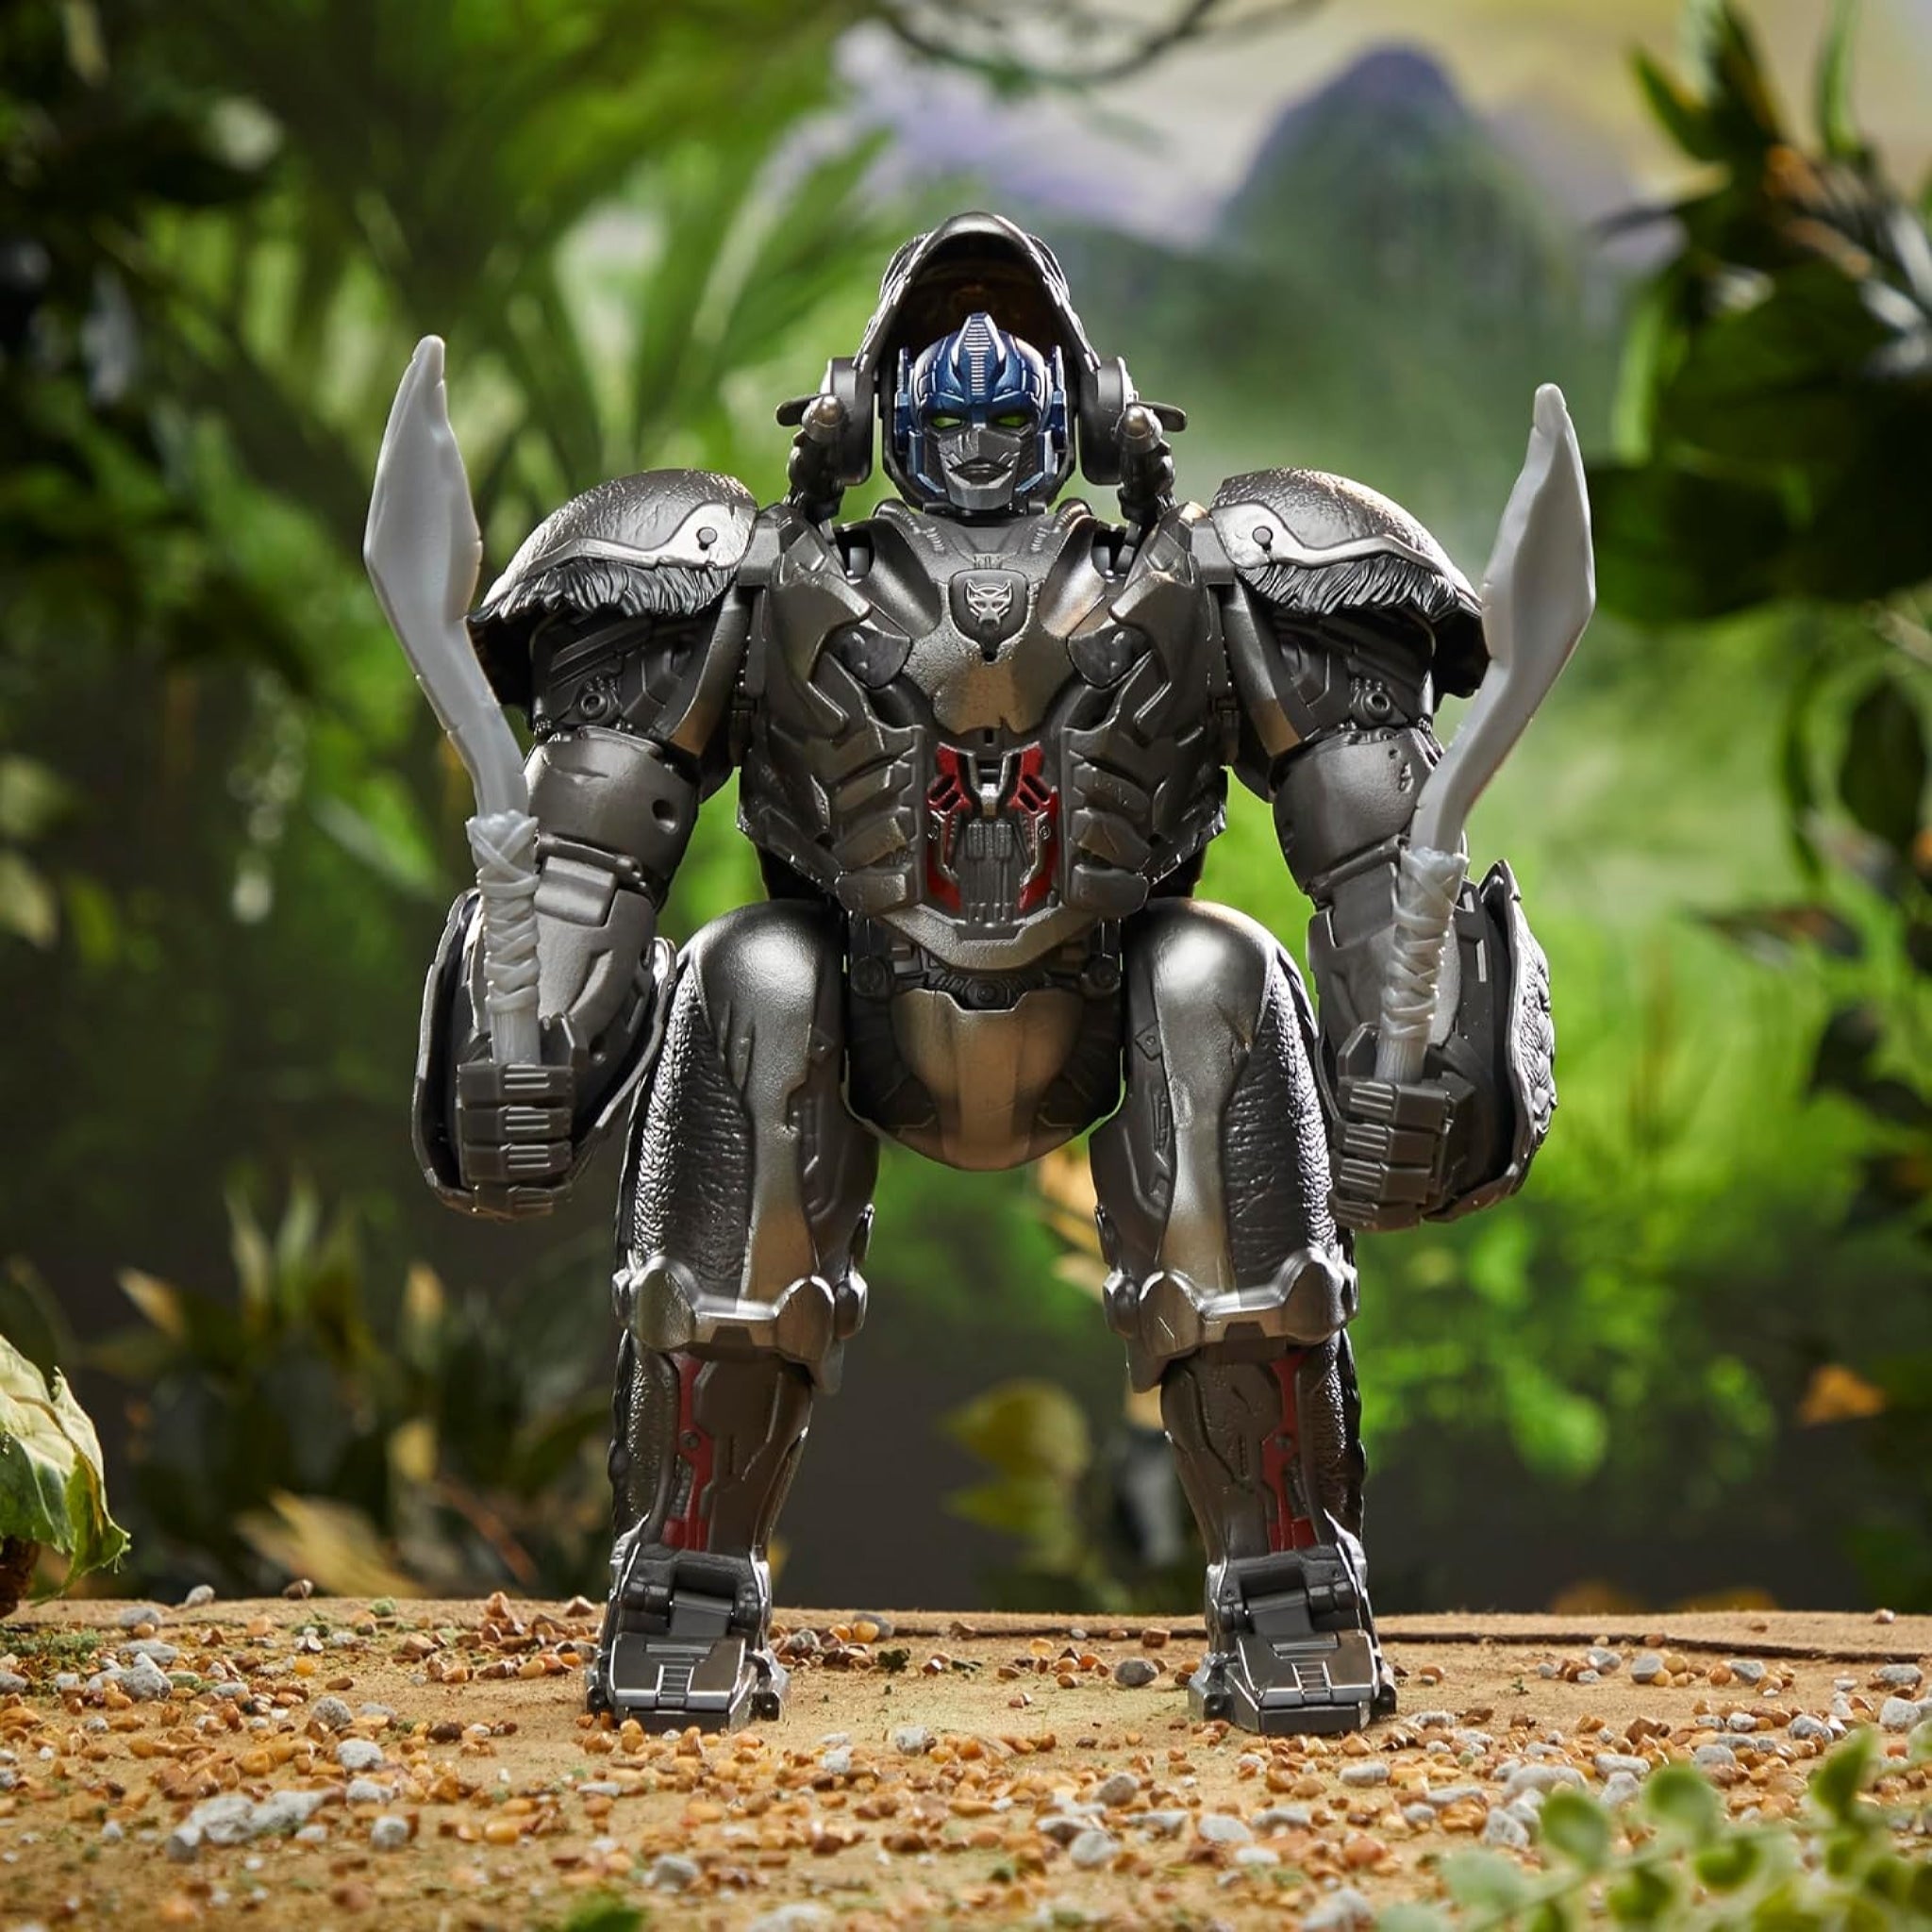 Transformers Rise of the Beast Command Convert Animatronic Optimus Primal Figure DAMAGED BOX